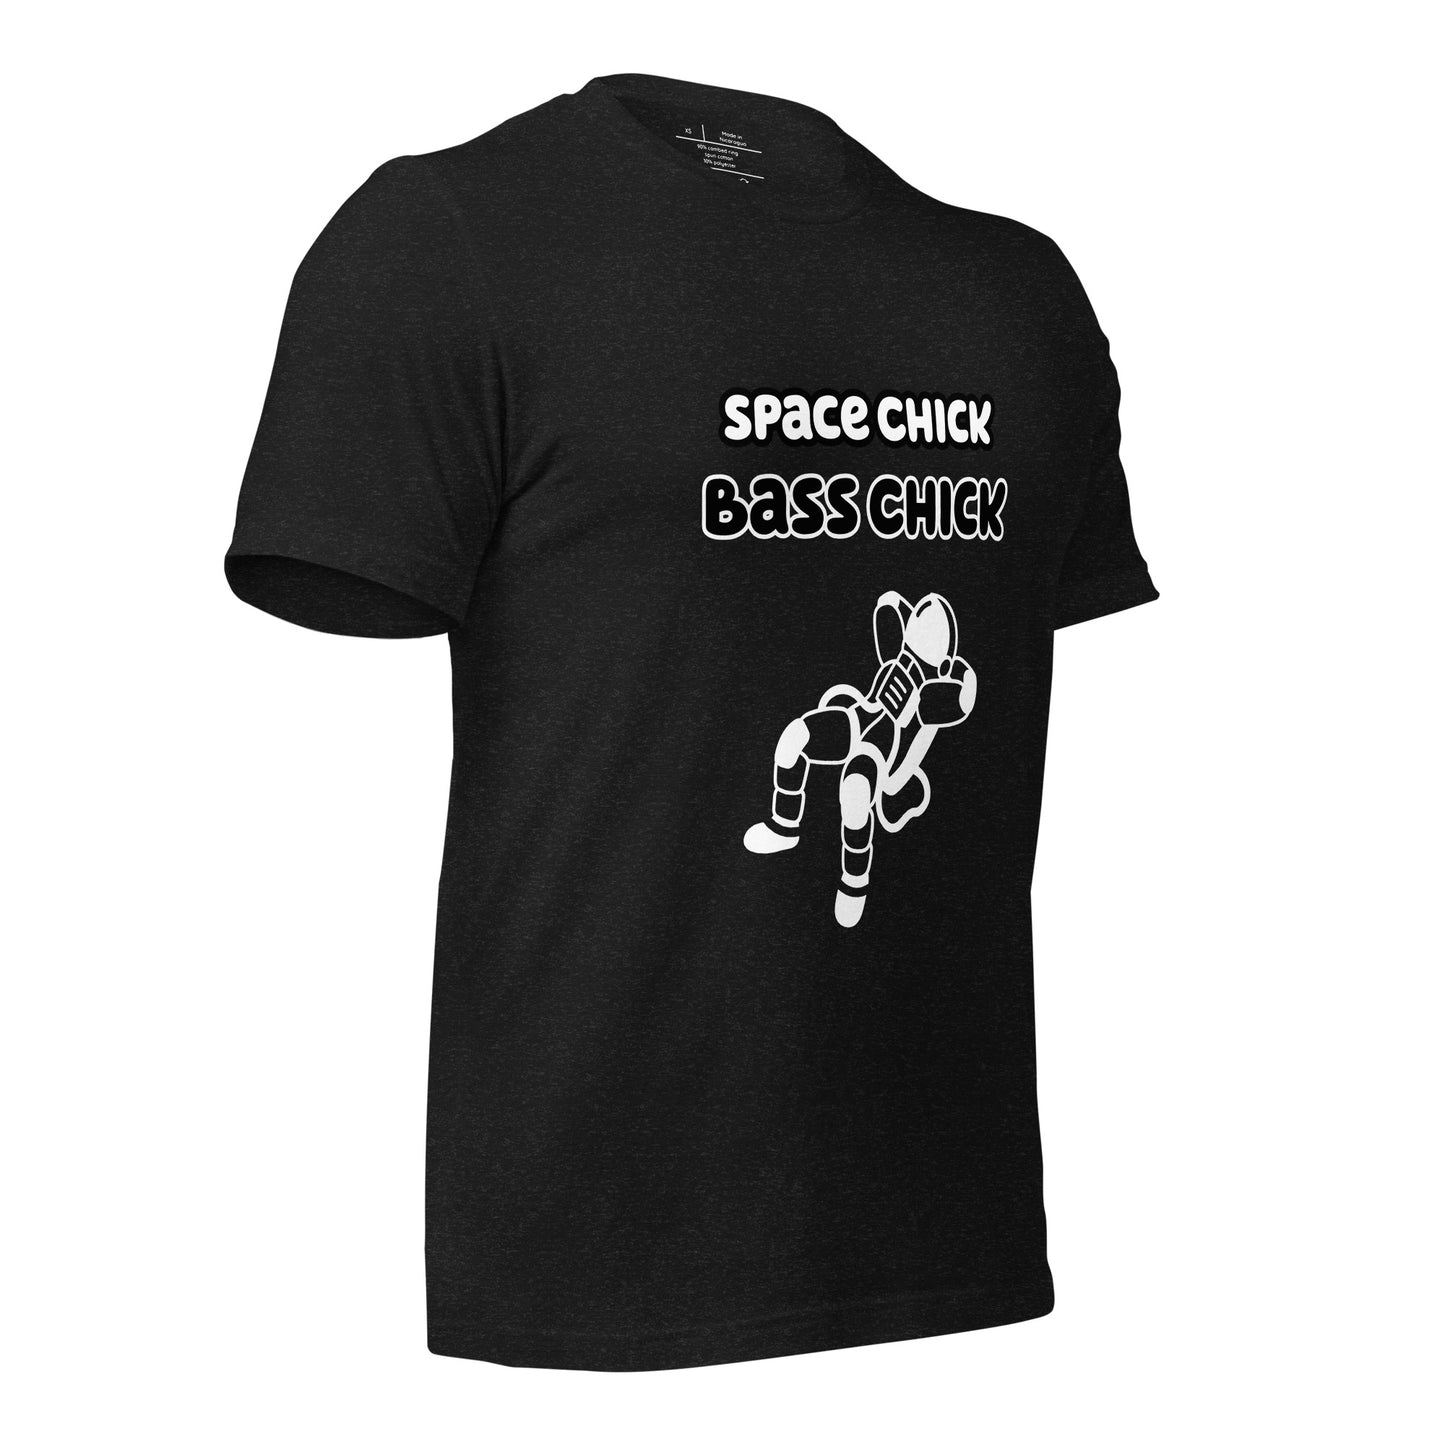 Space Chick Bass Chick T-shirt